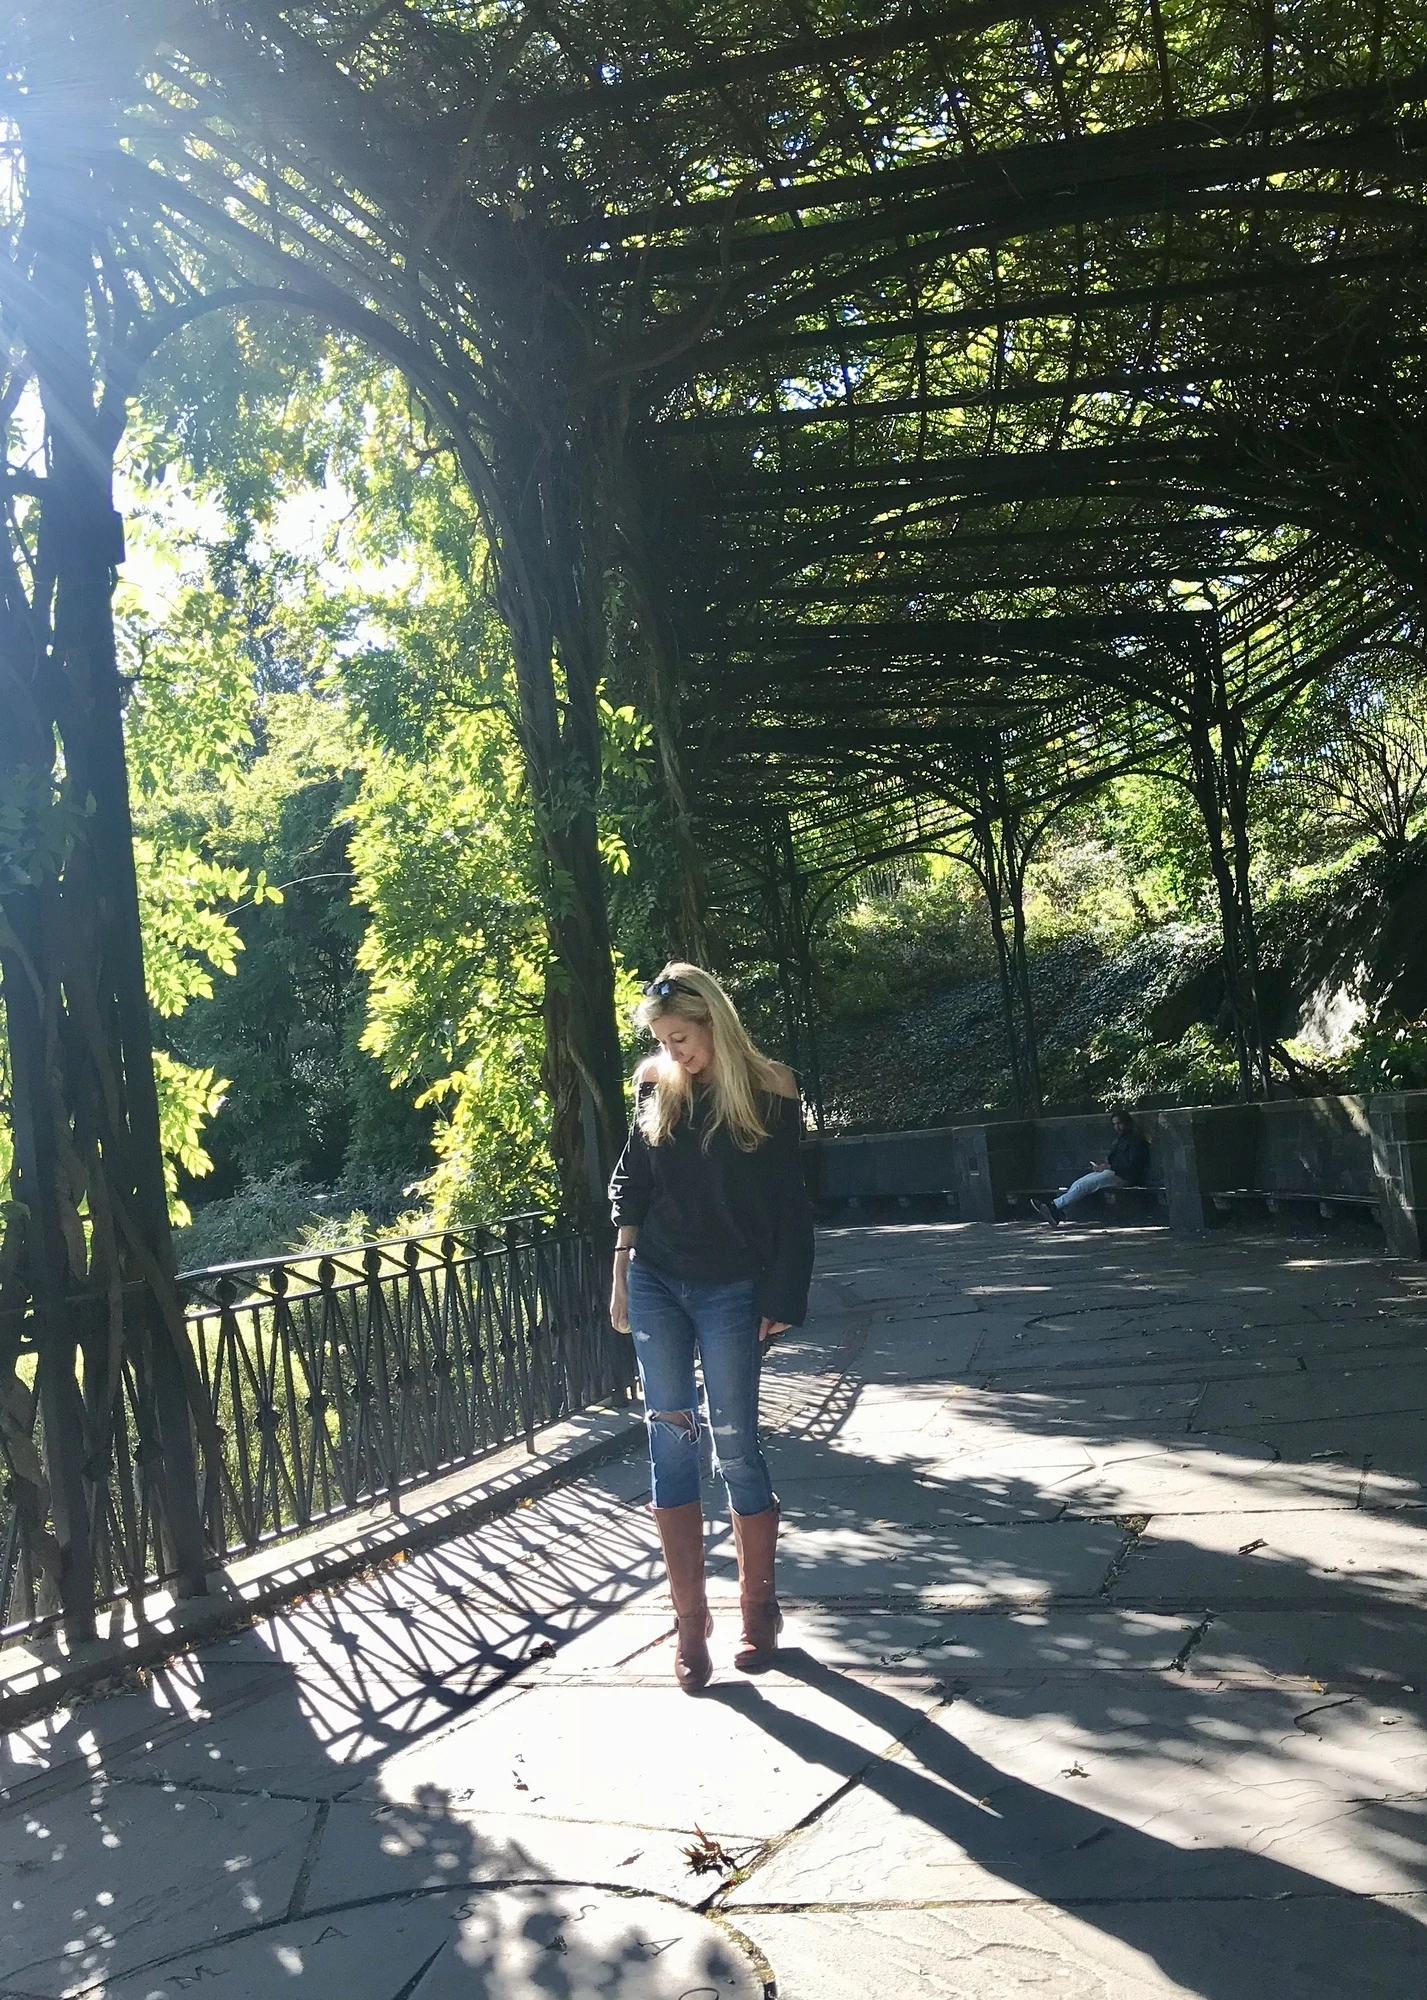 Wisteria Pergola Conservatory Gardens Central Park best photo opps instagram